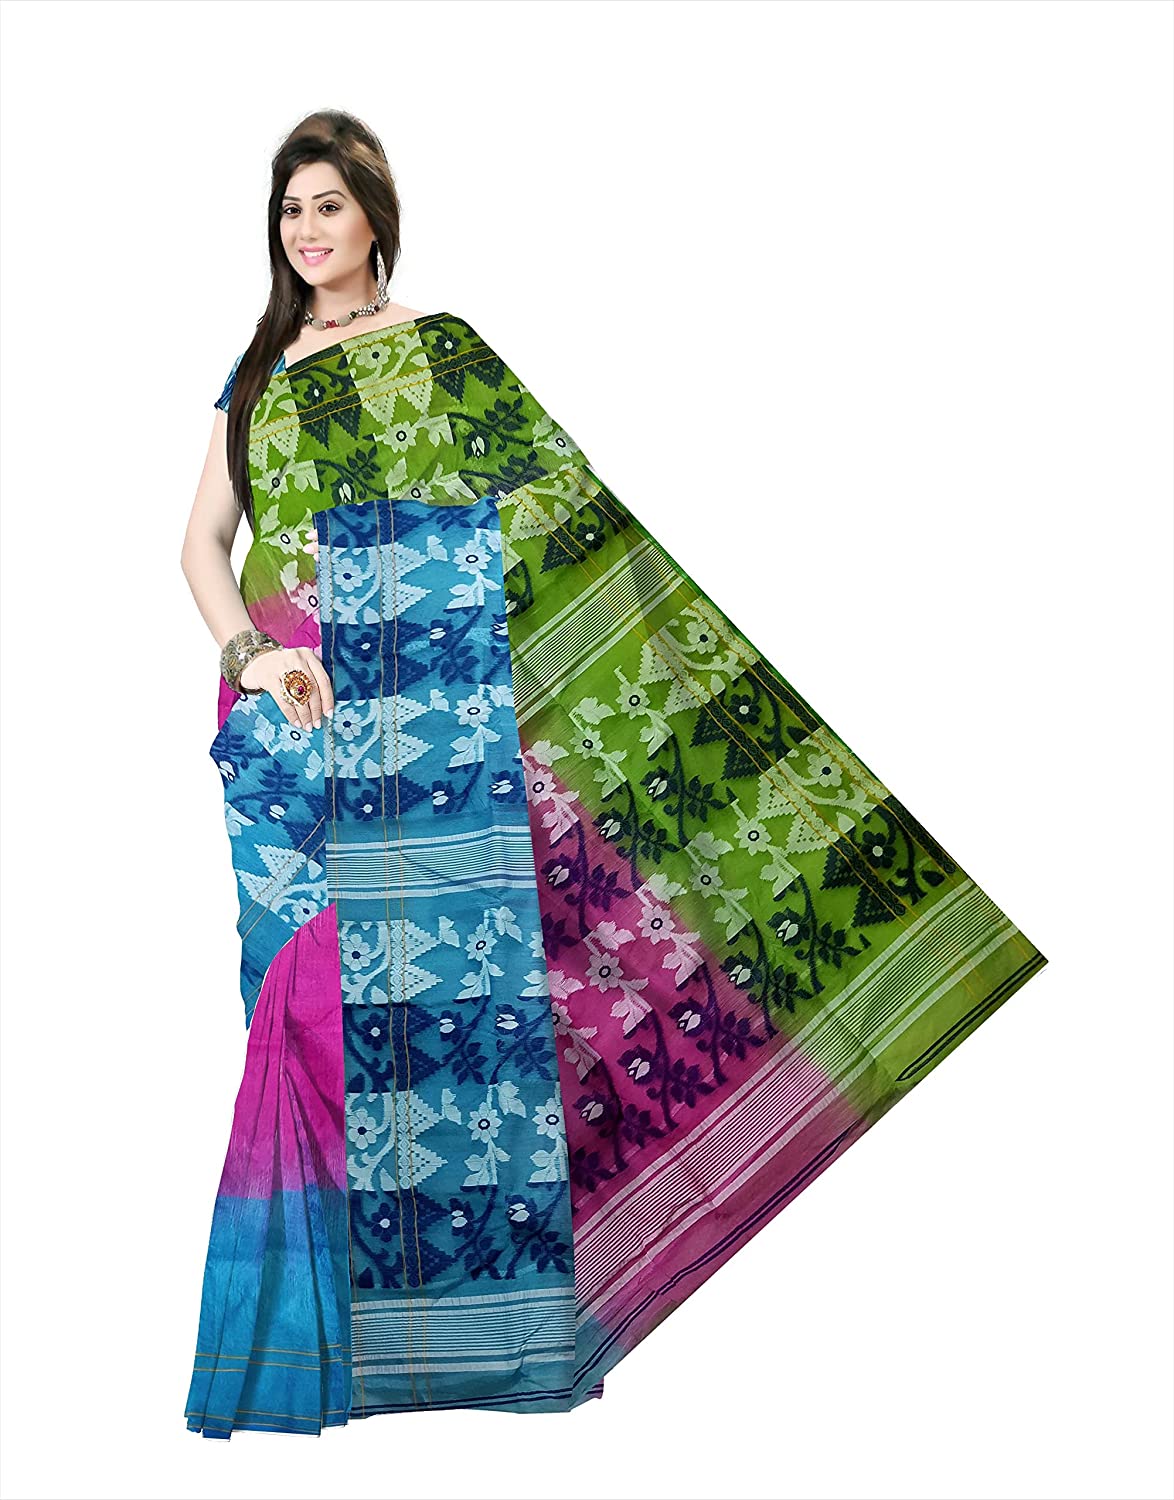 Pradip Fabrics Ethnic Women's Cotton Tant Gap Jamdani Green,Pink, and Aqua Color Saree